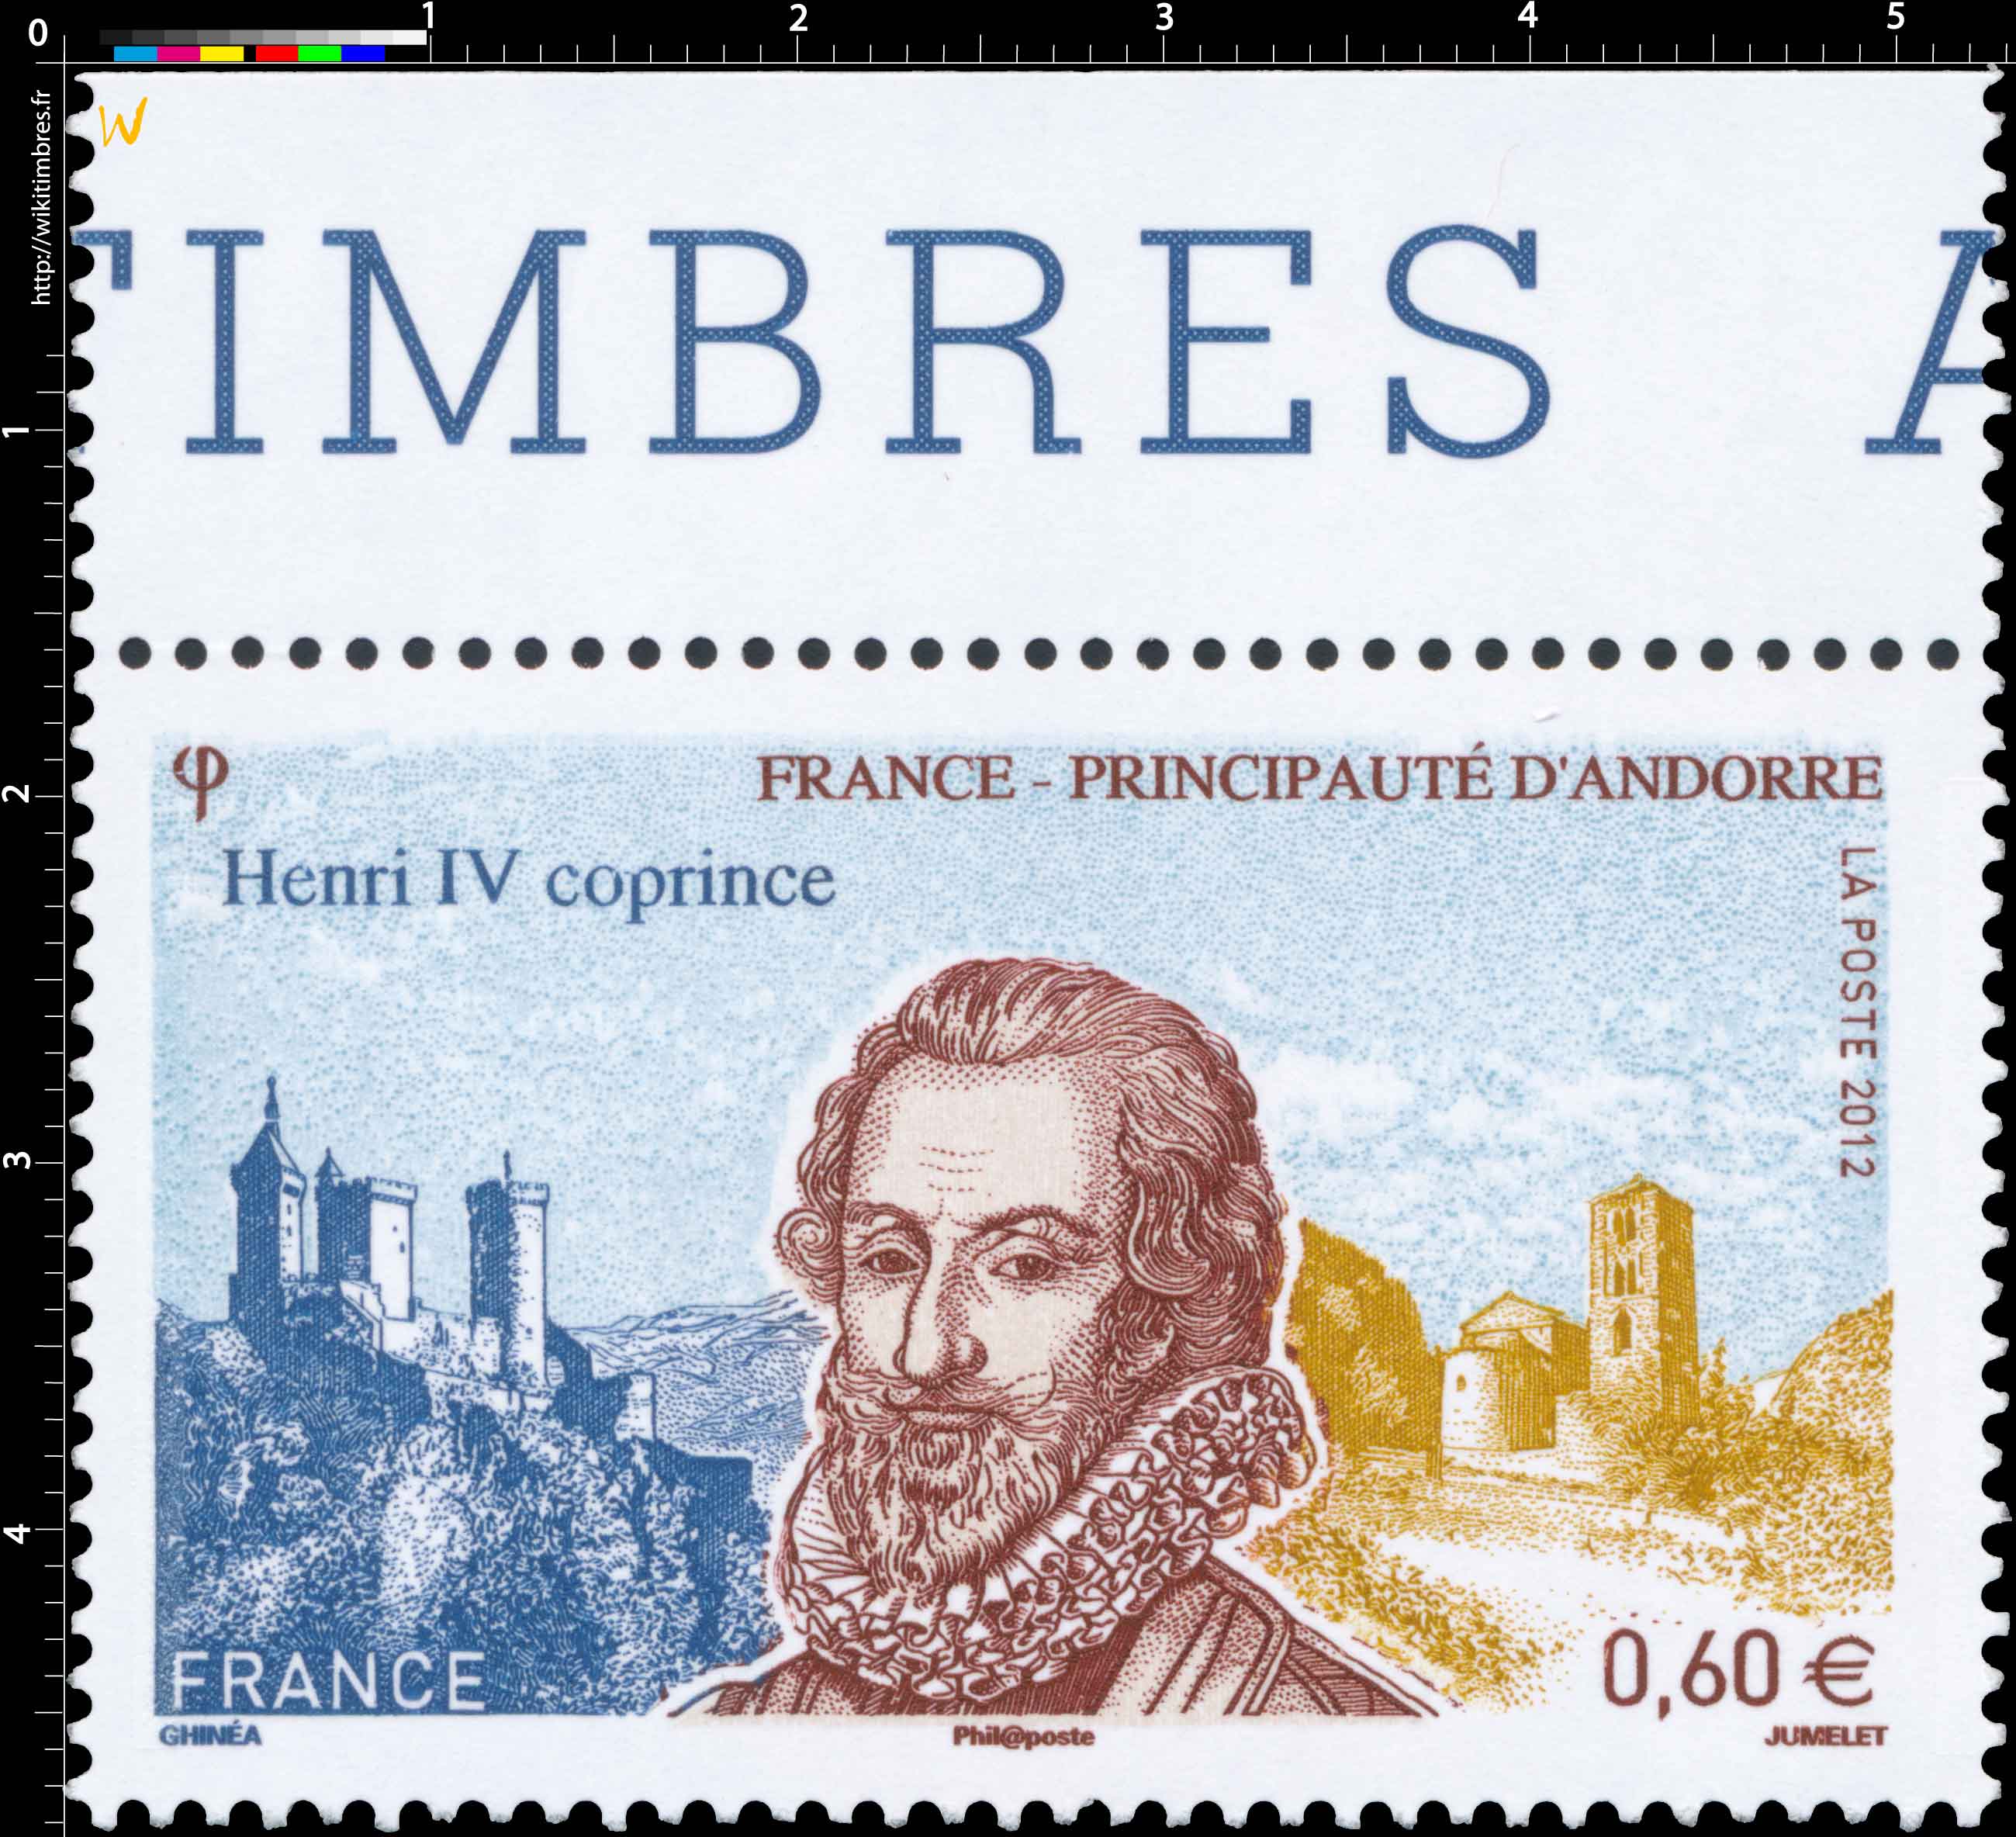 Henri IV coprince France-Principauté d'Andorre